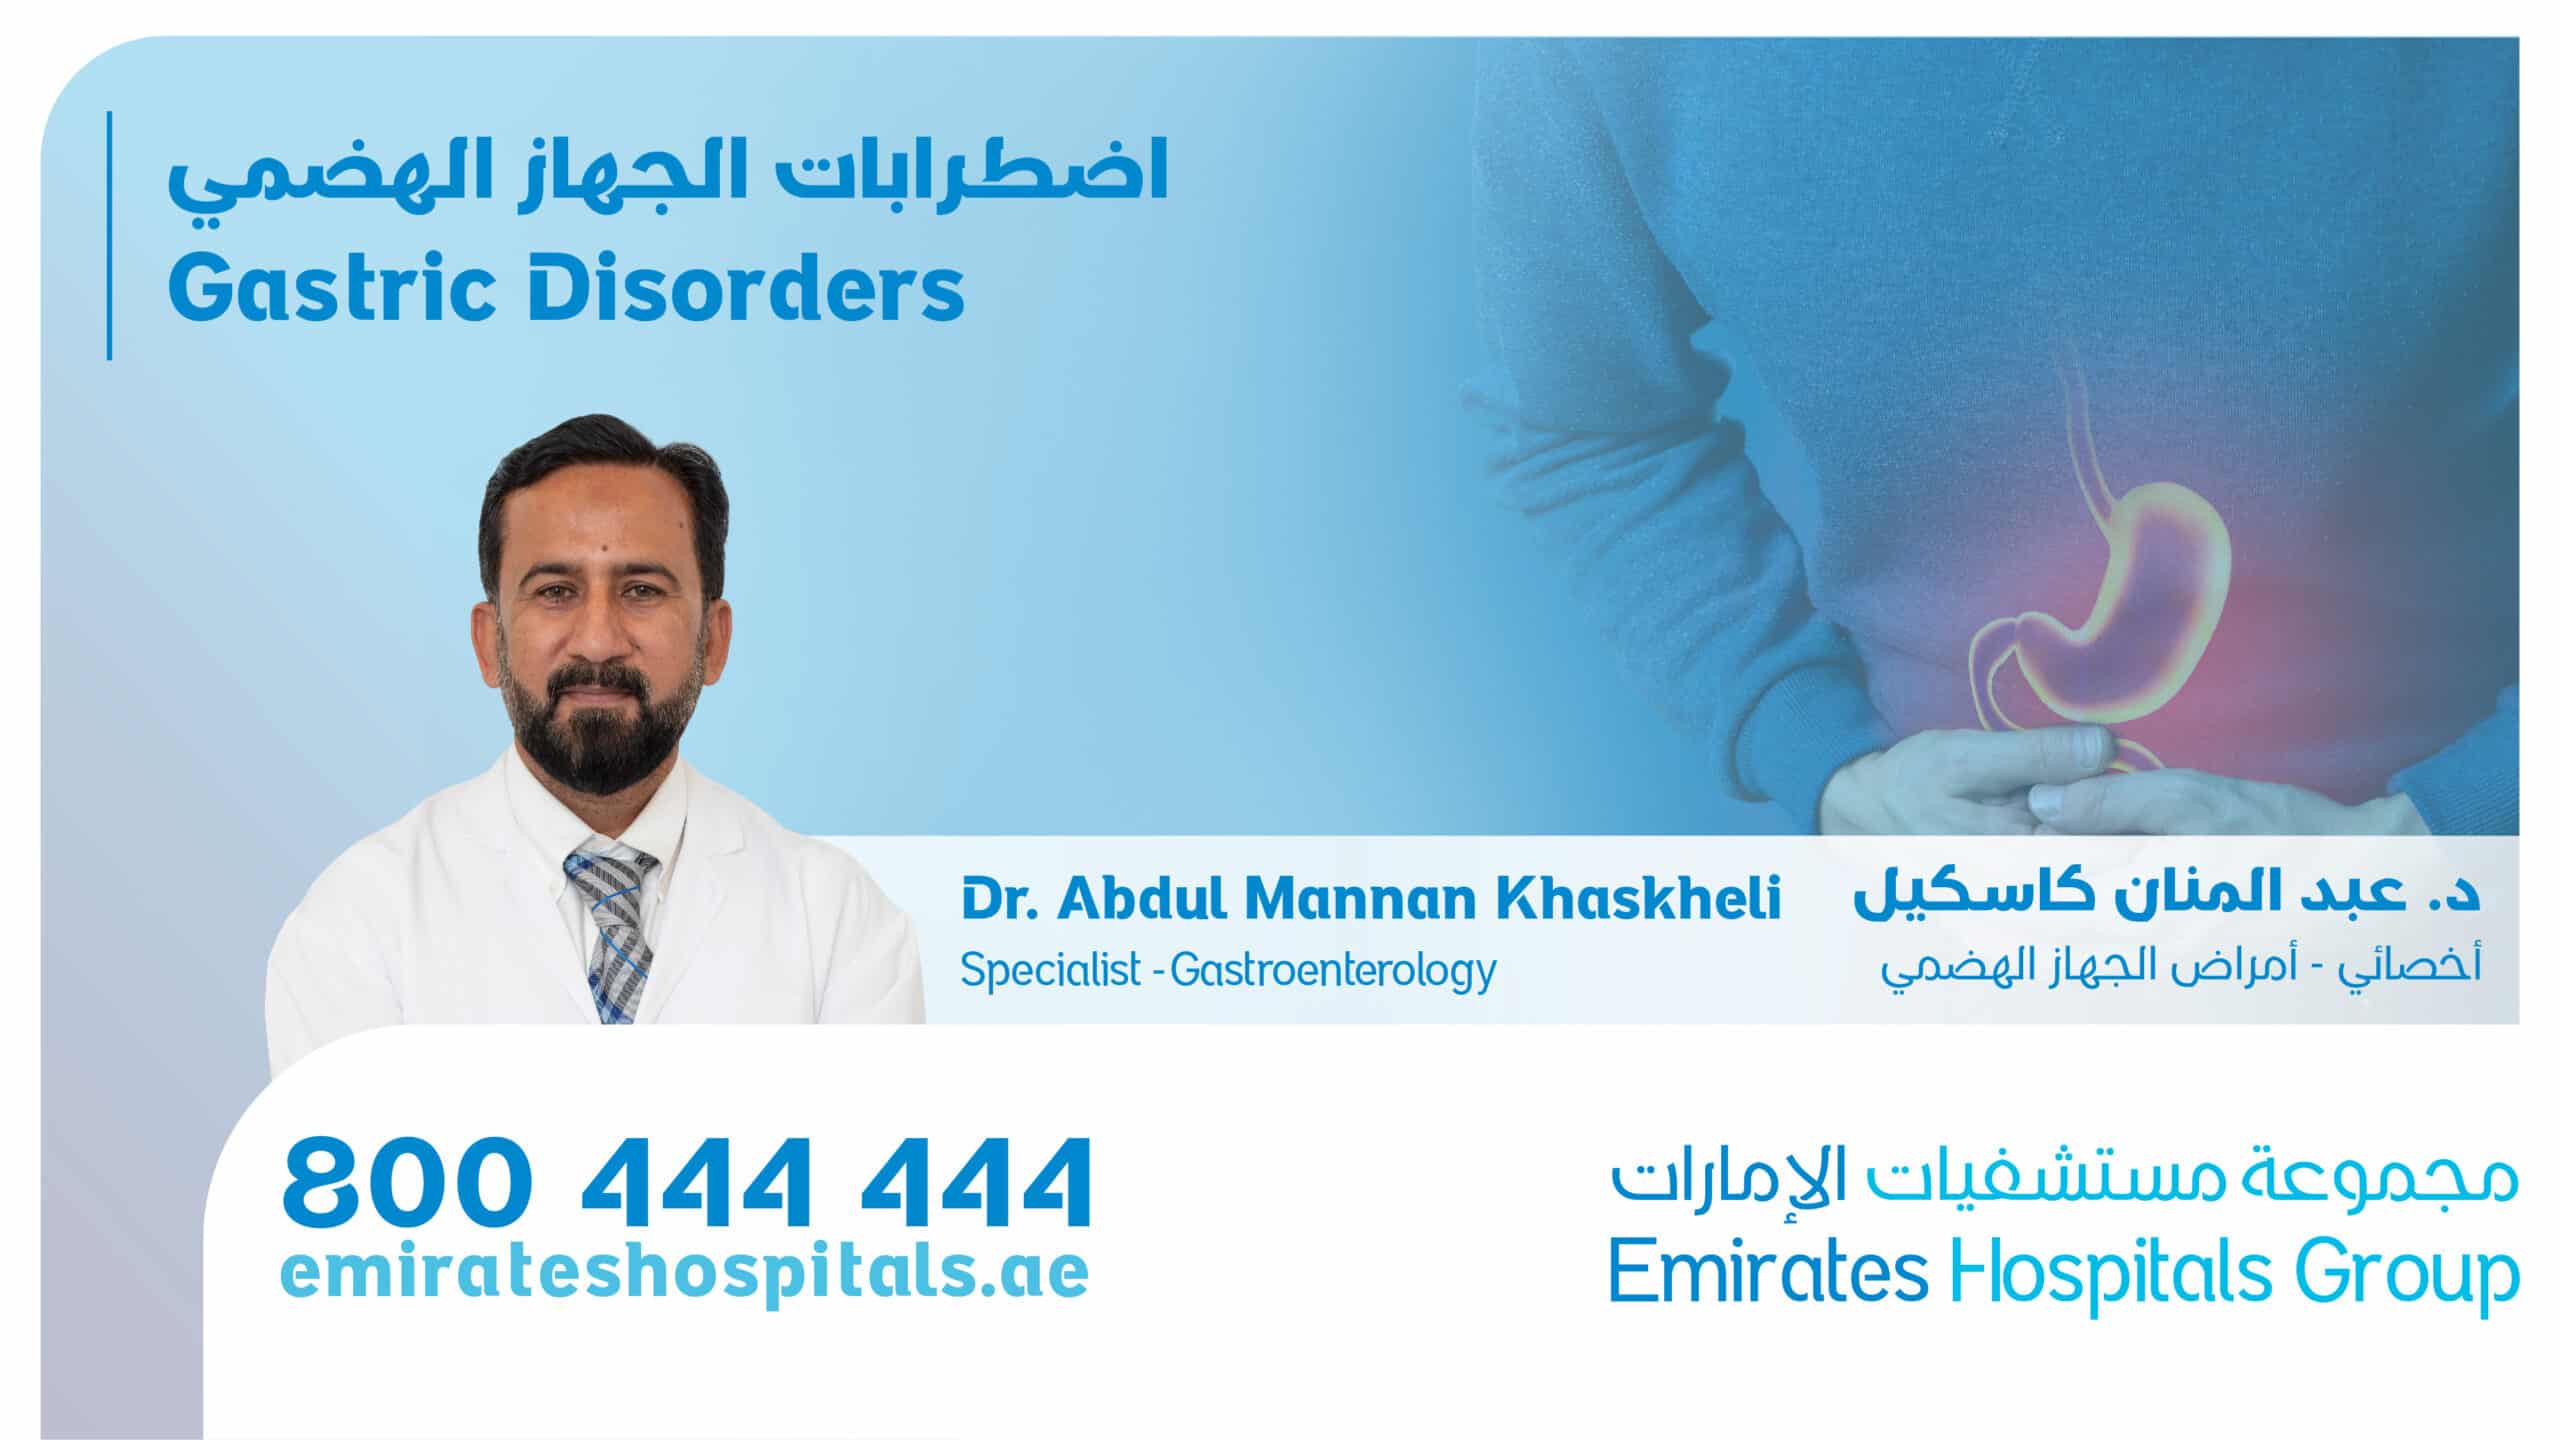 Gastric Diorders - Dr. Abdul Manan Khaskheli, Specialist Gastroenterology